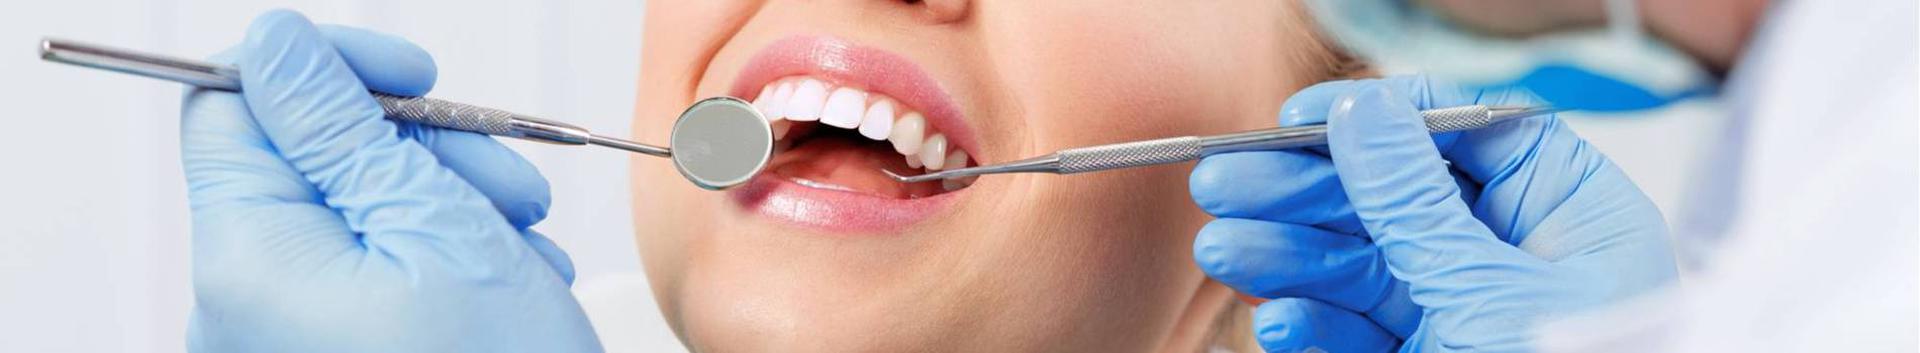 Dentist, Dental Surgery, pediatric dental care, oral surgery